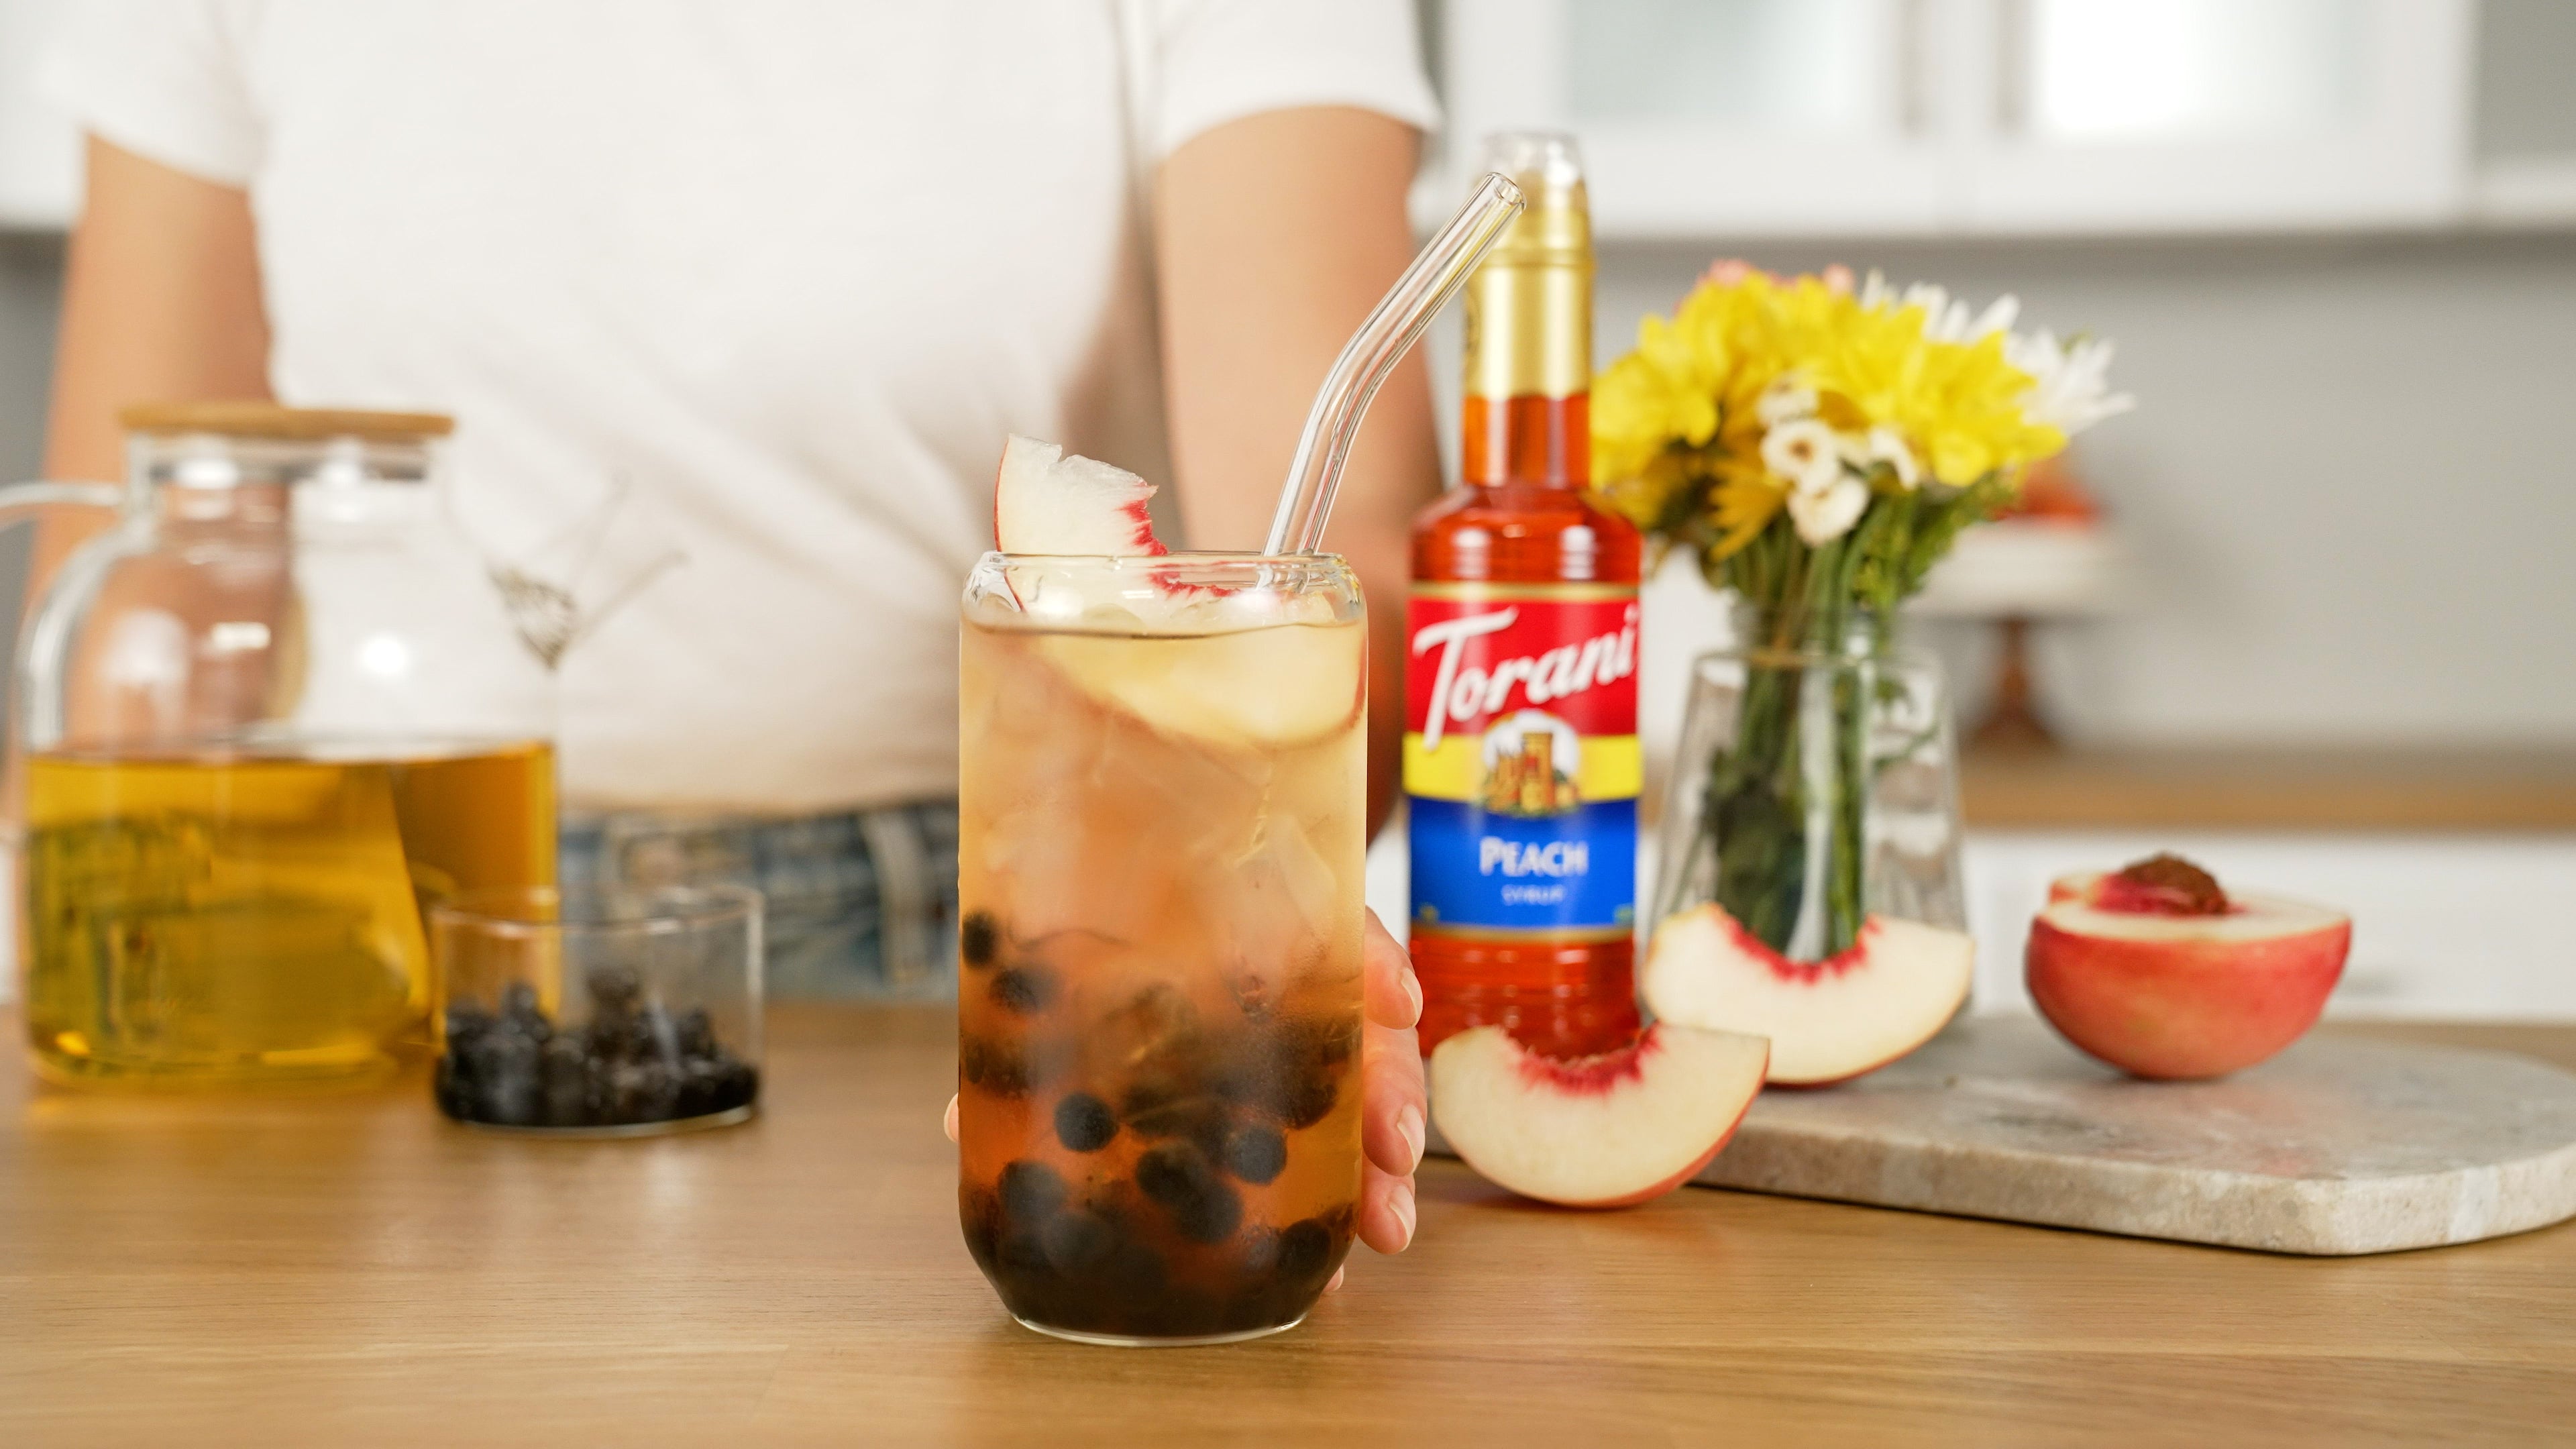 Torani Classic Flavored Syrups - 750 ml Glass Bottle: Peach